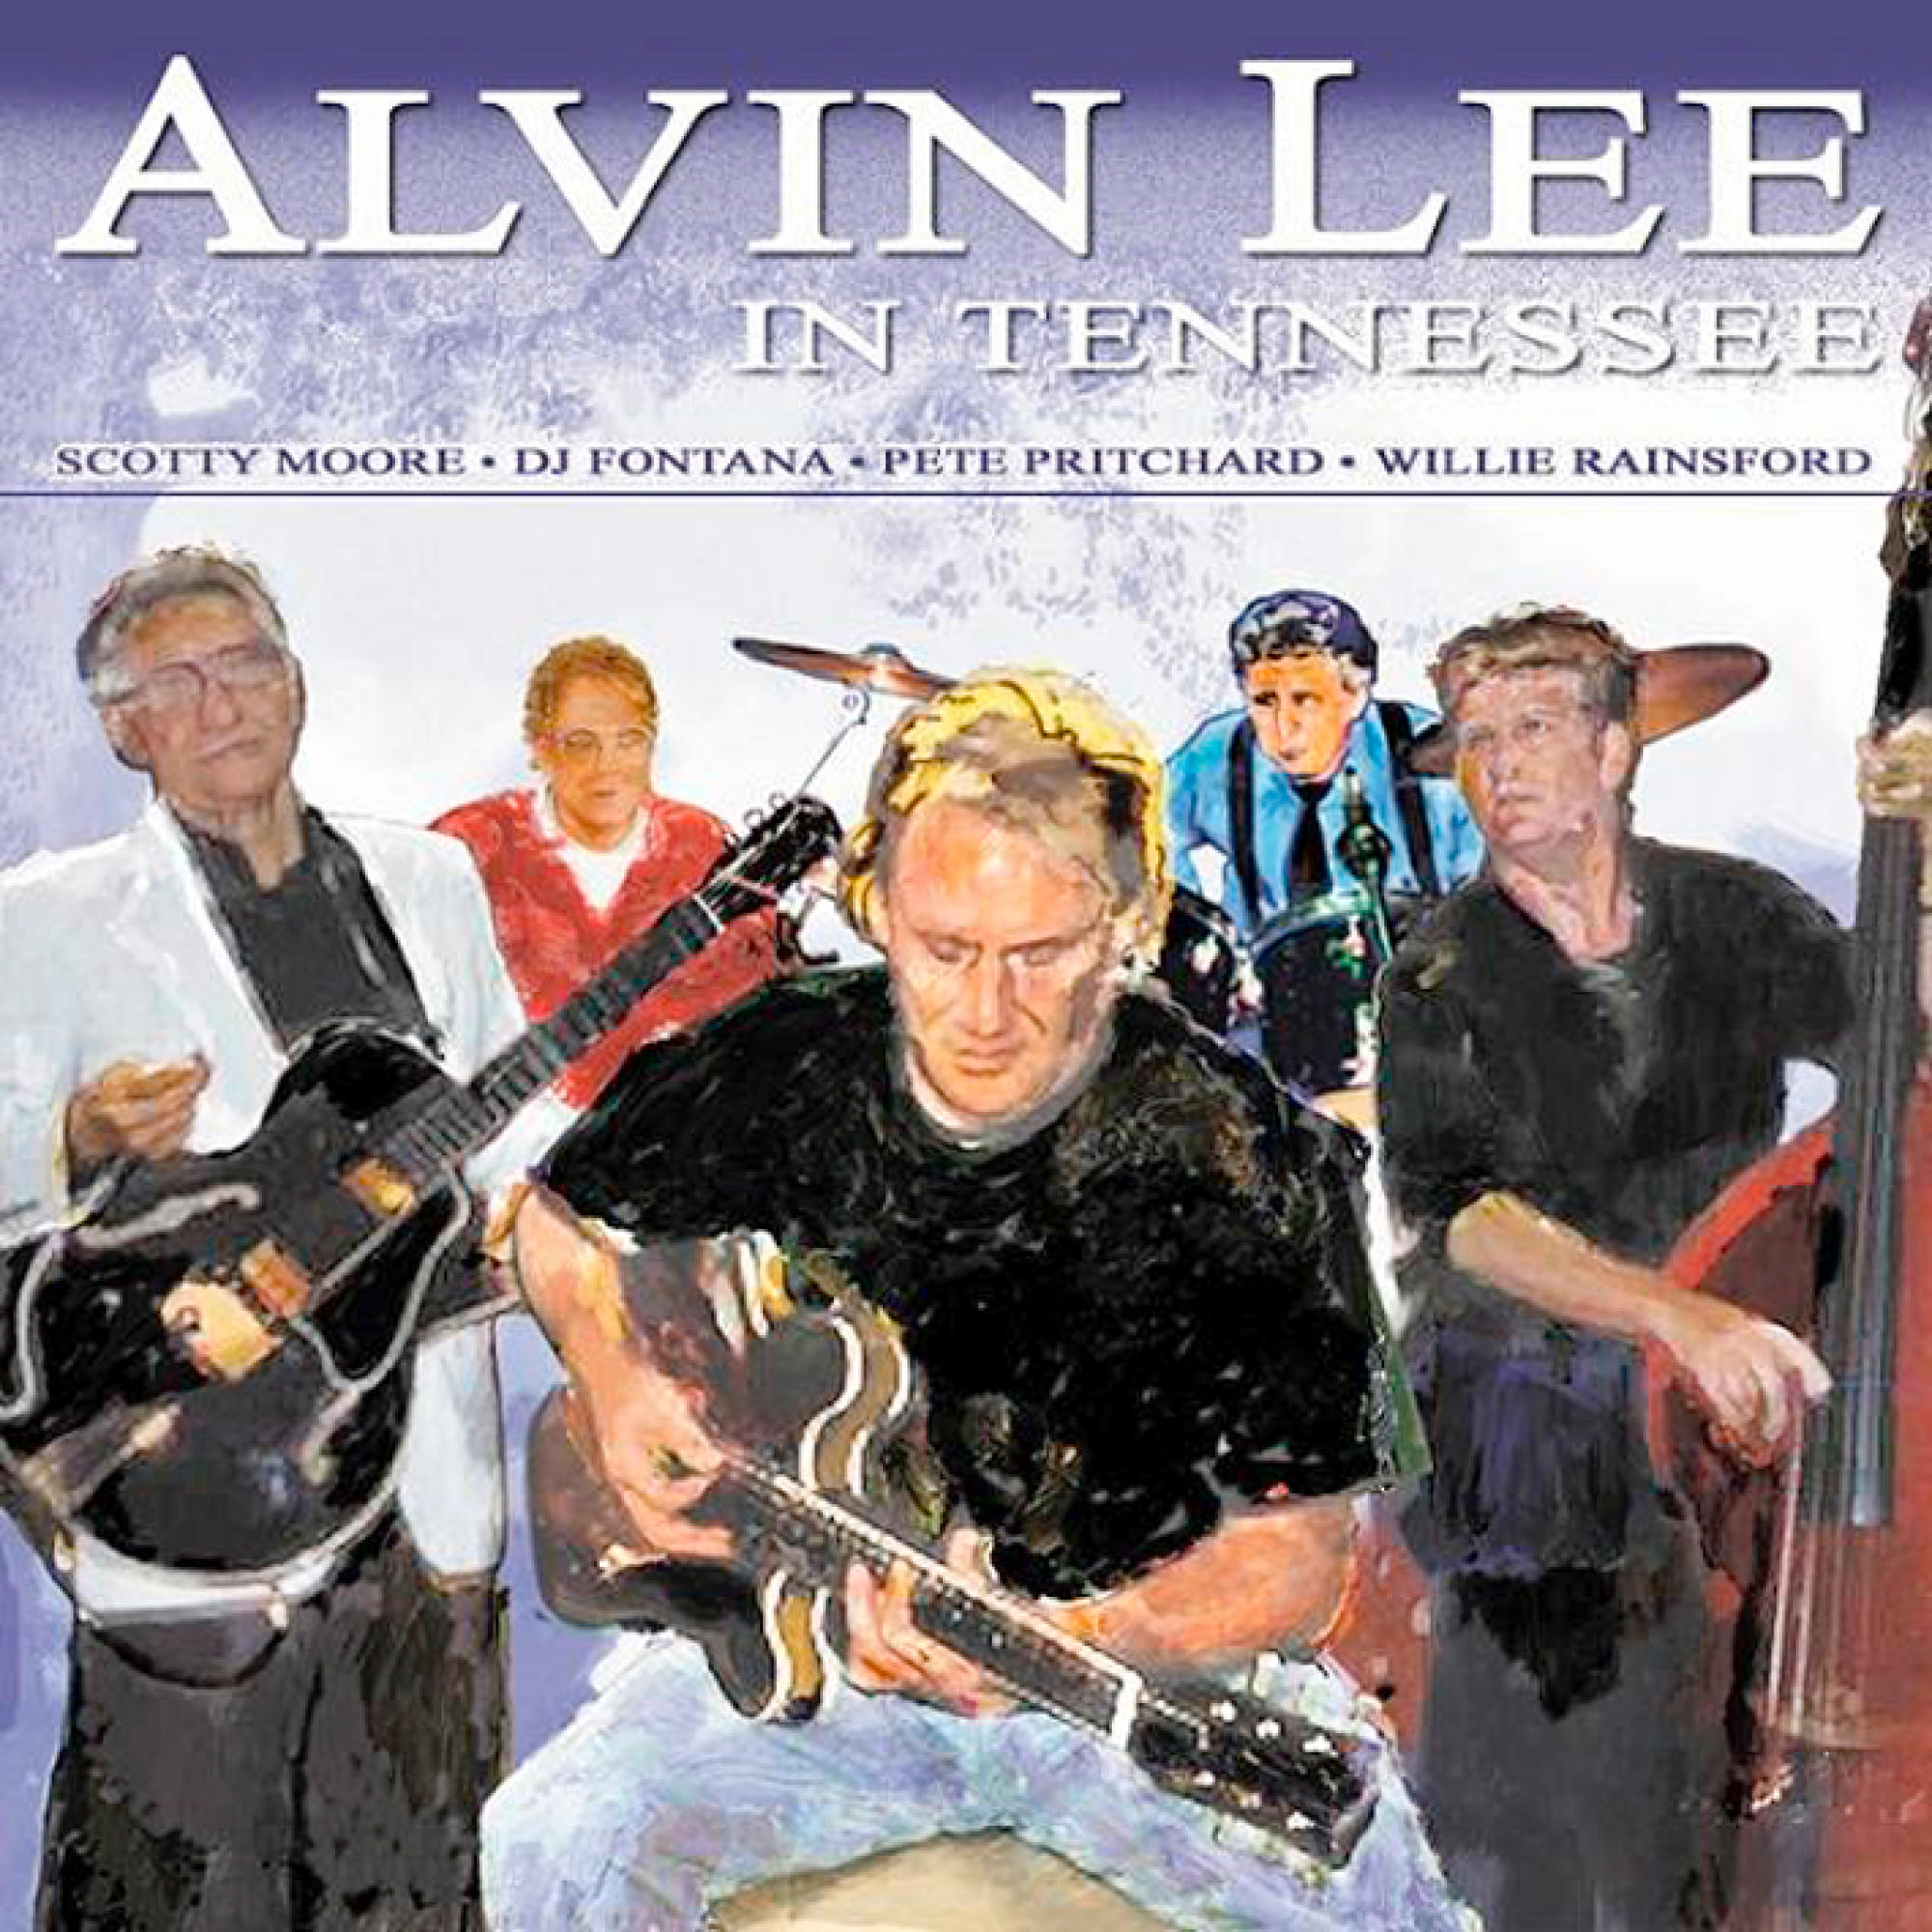 Alvin Lee - ALVIN LEE TENNESSEE IN (CD) 